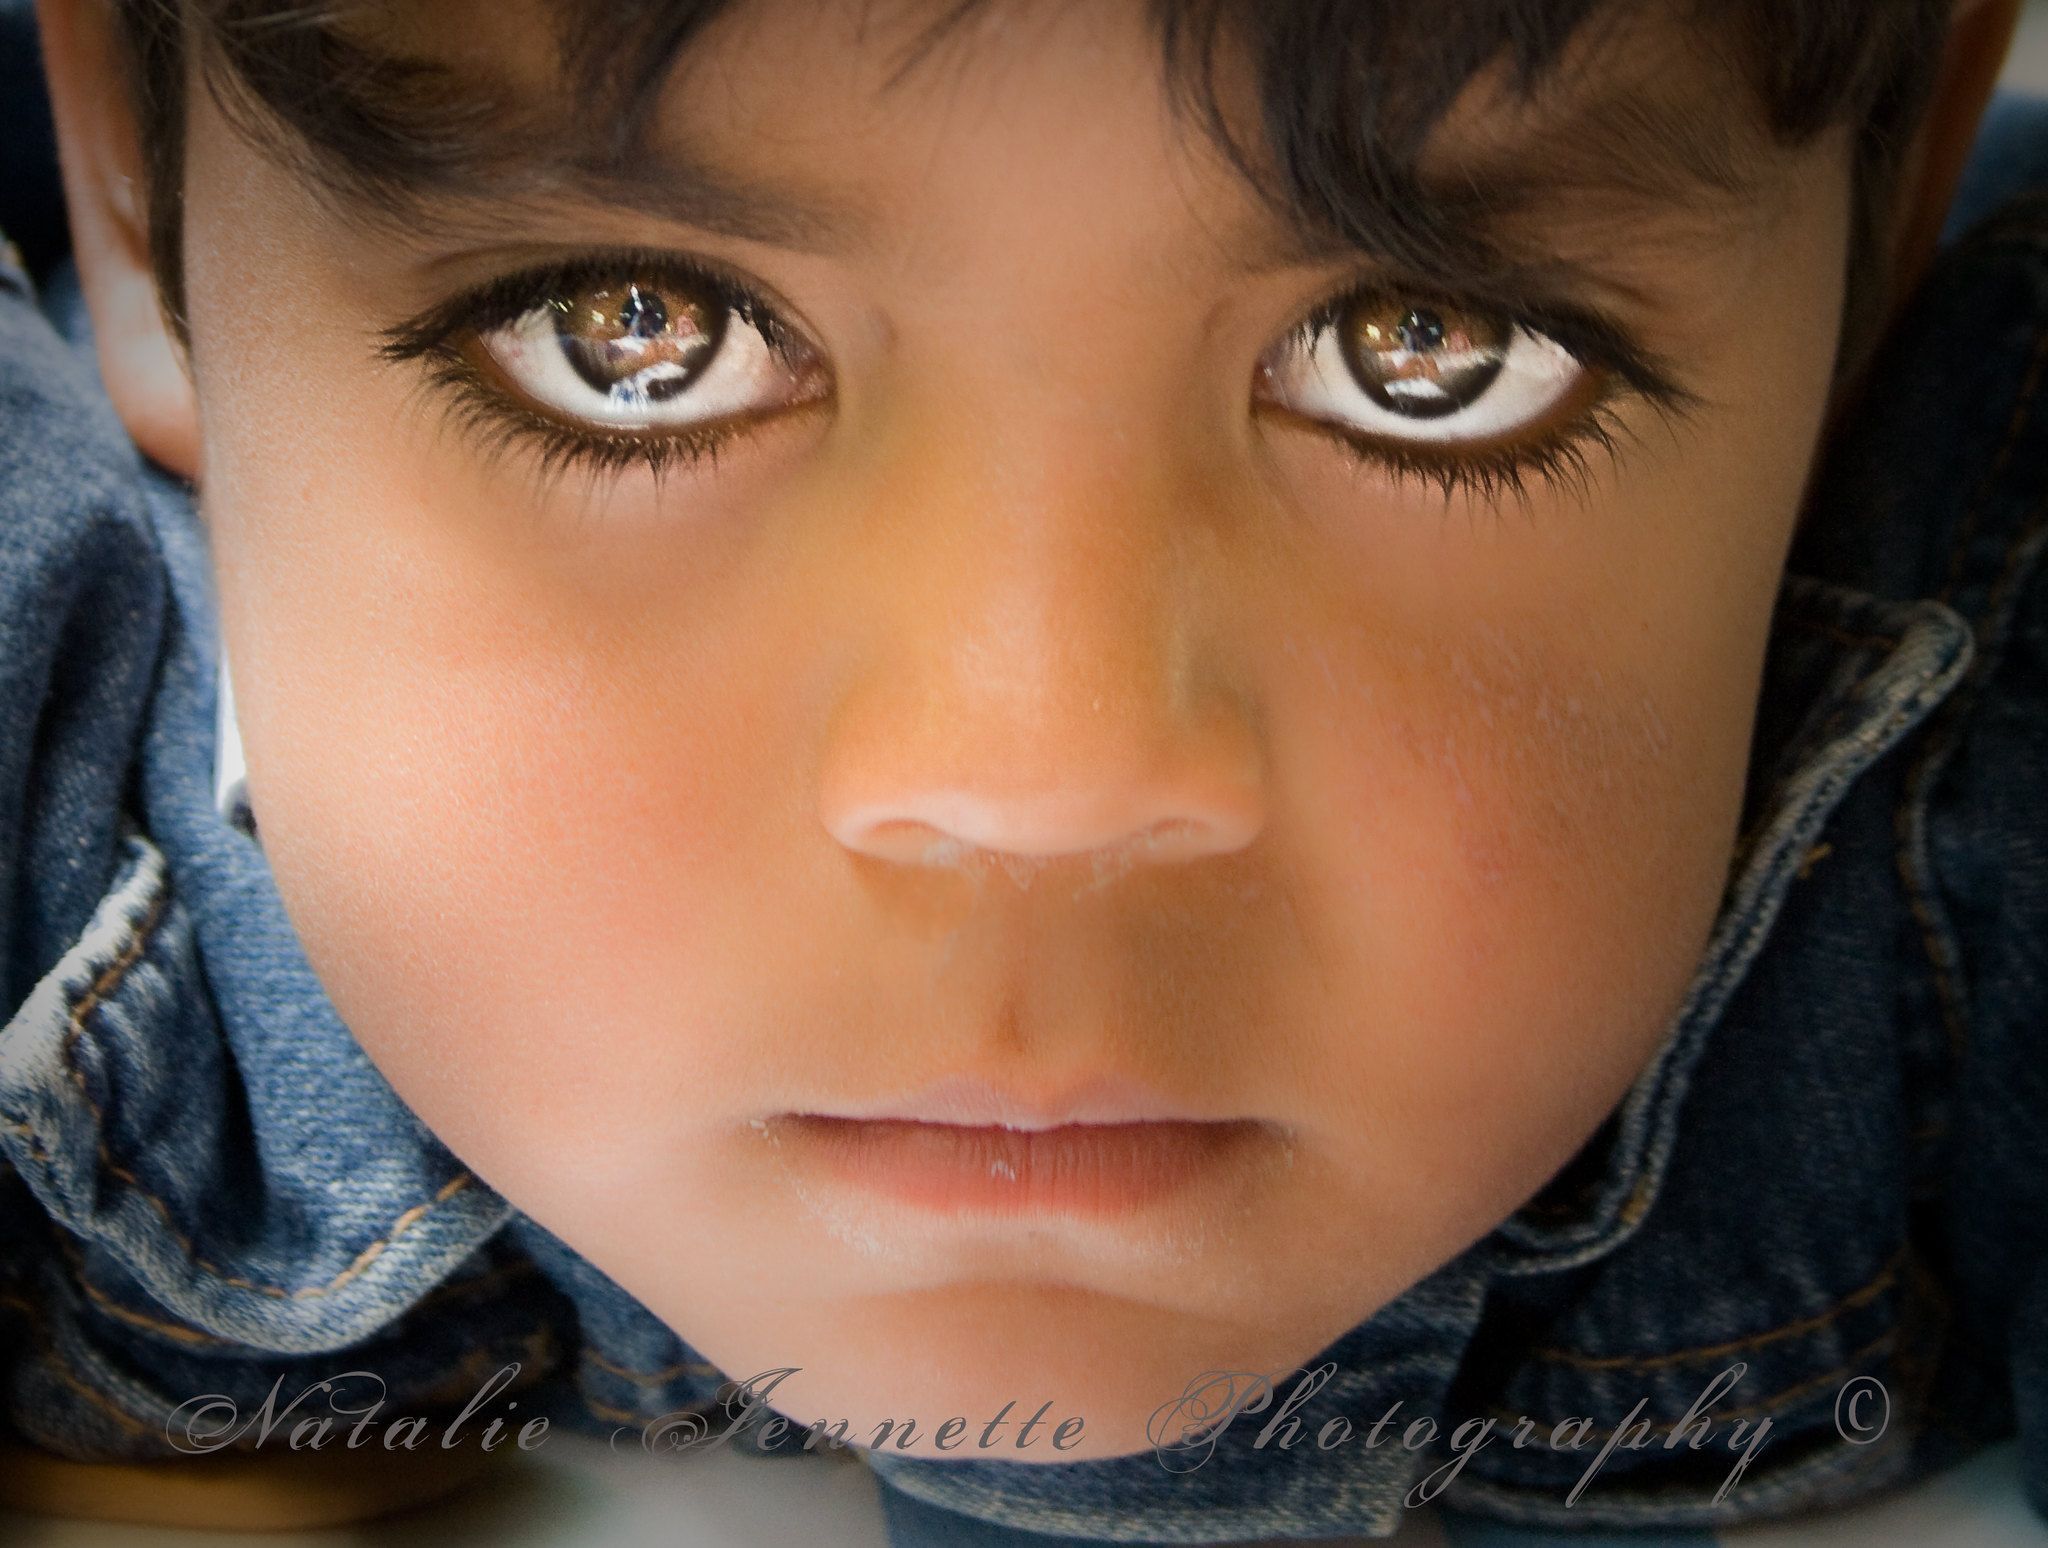 National Geographic EYES -   beauty Eyes portraits